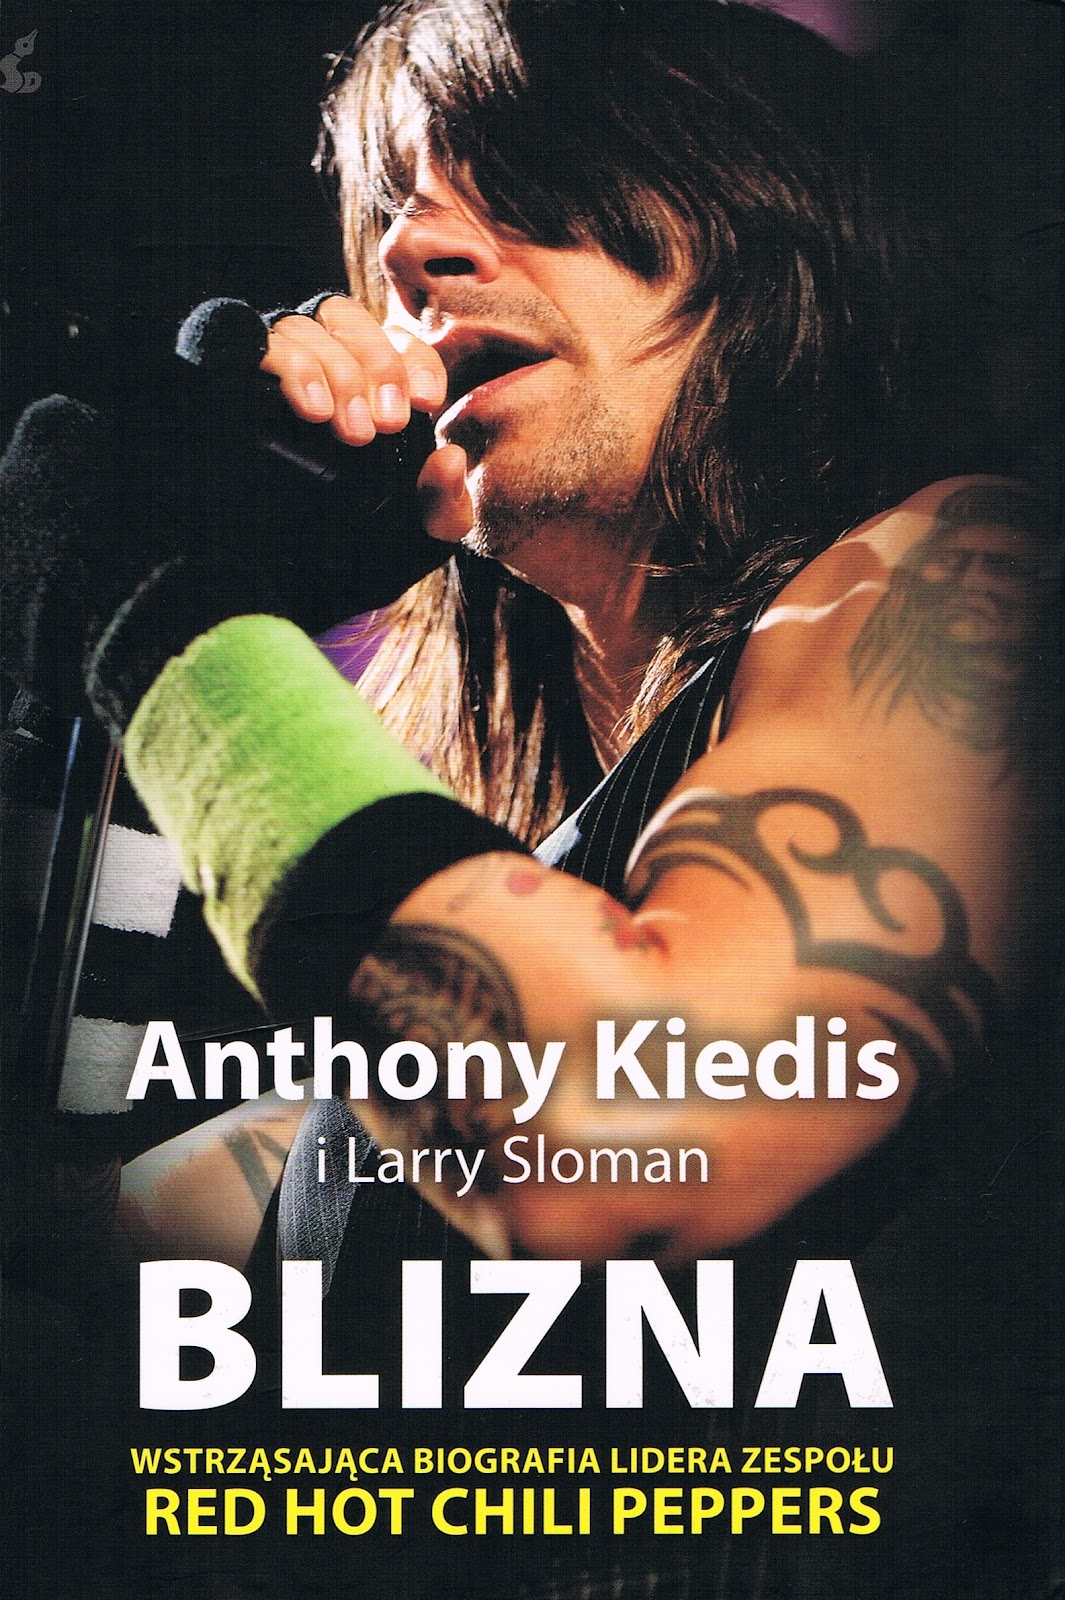 Blizna (Scar Tissue) - Anthony Kiedis, Larry Sloman, Wydawnictwo Sonia Draga, 2012